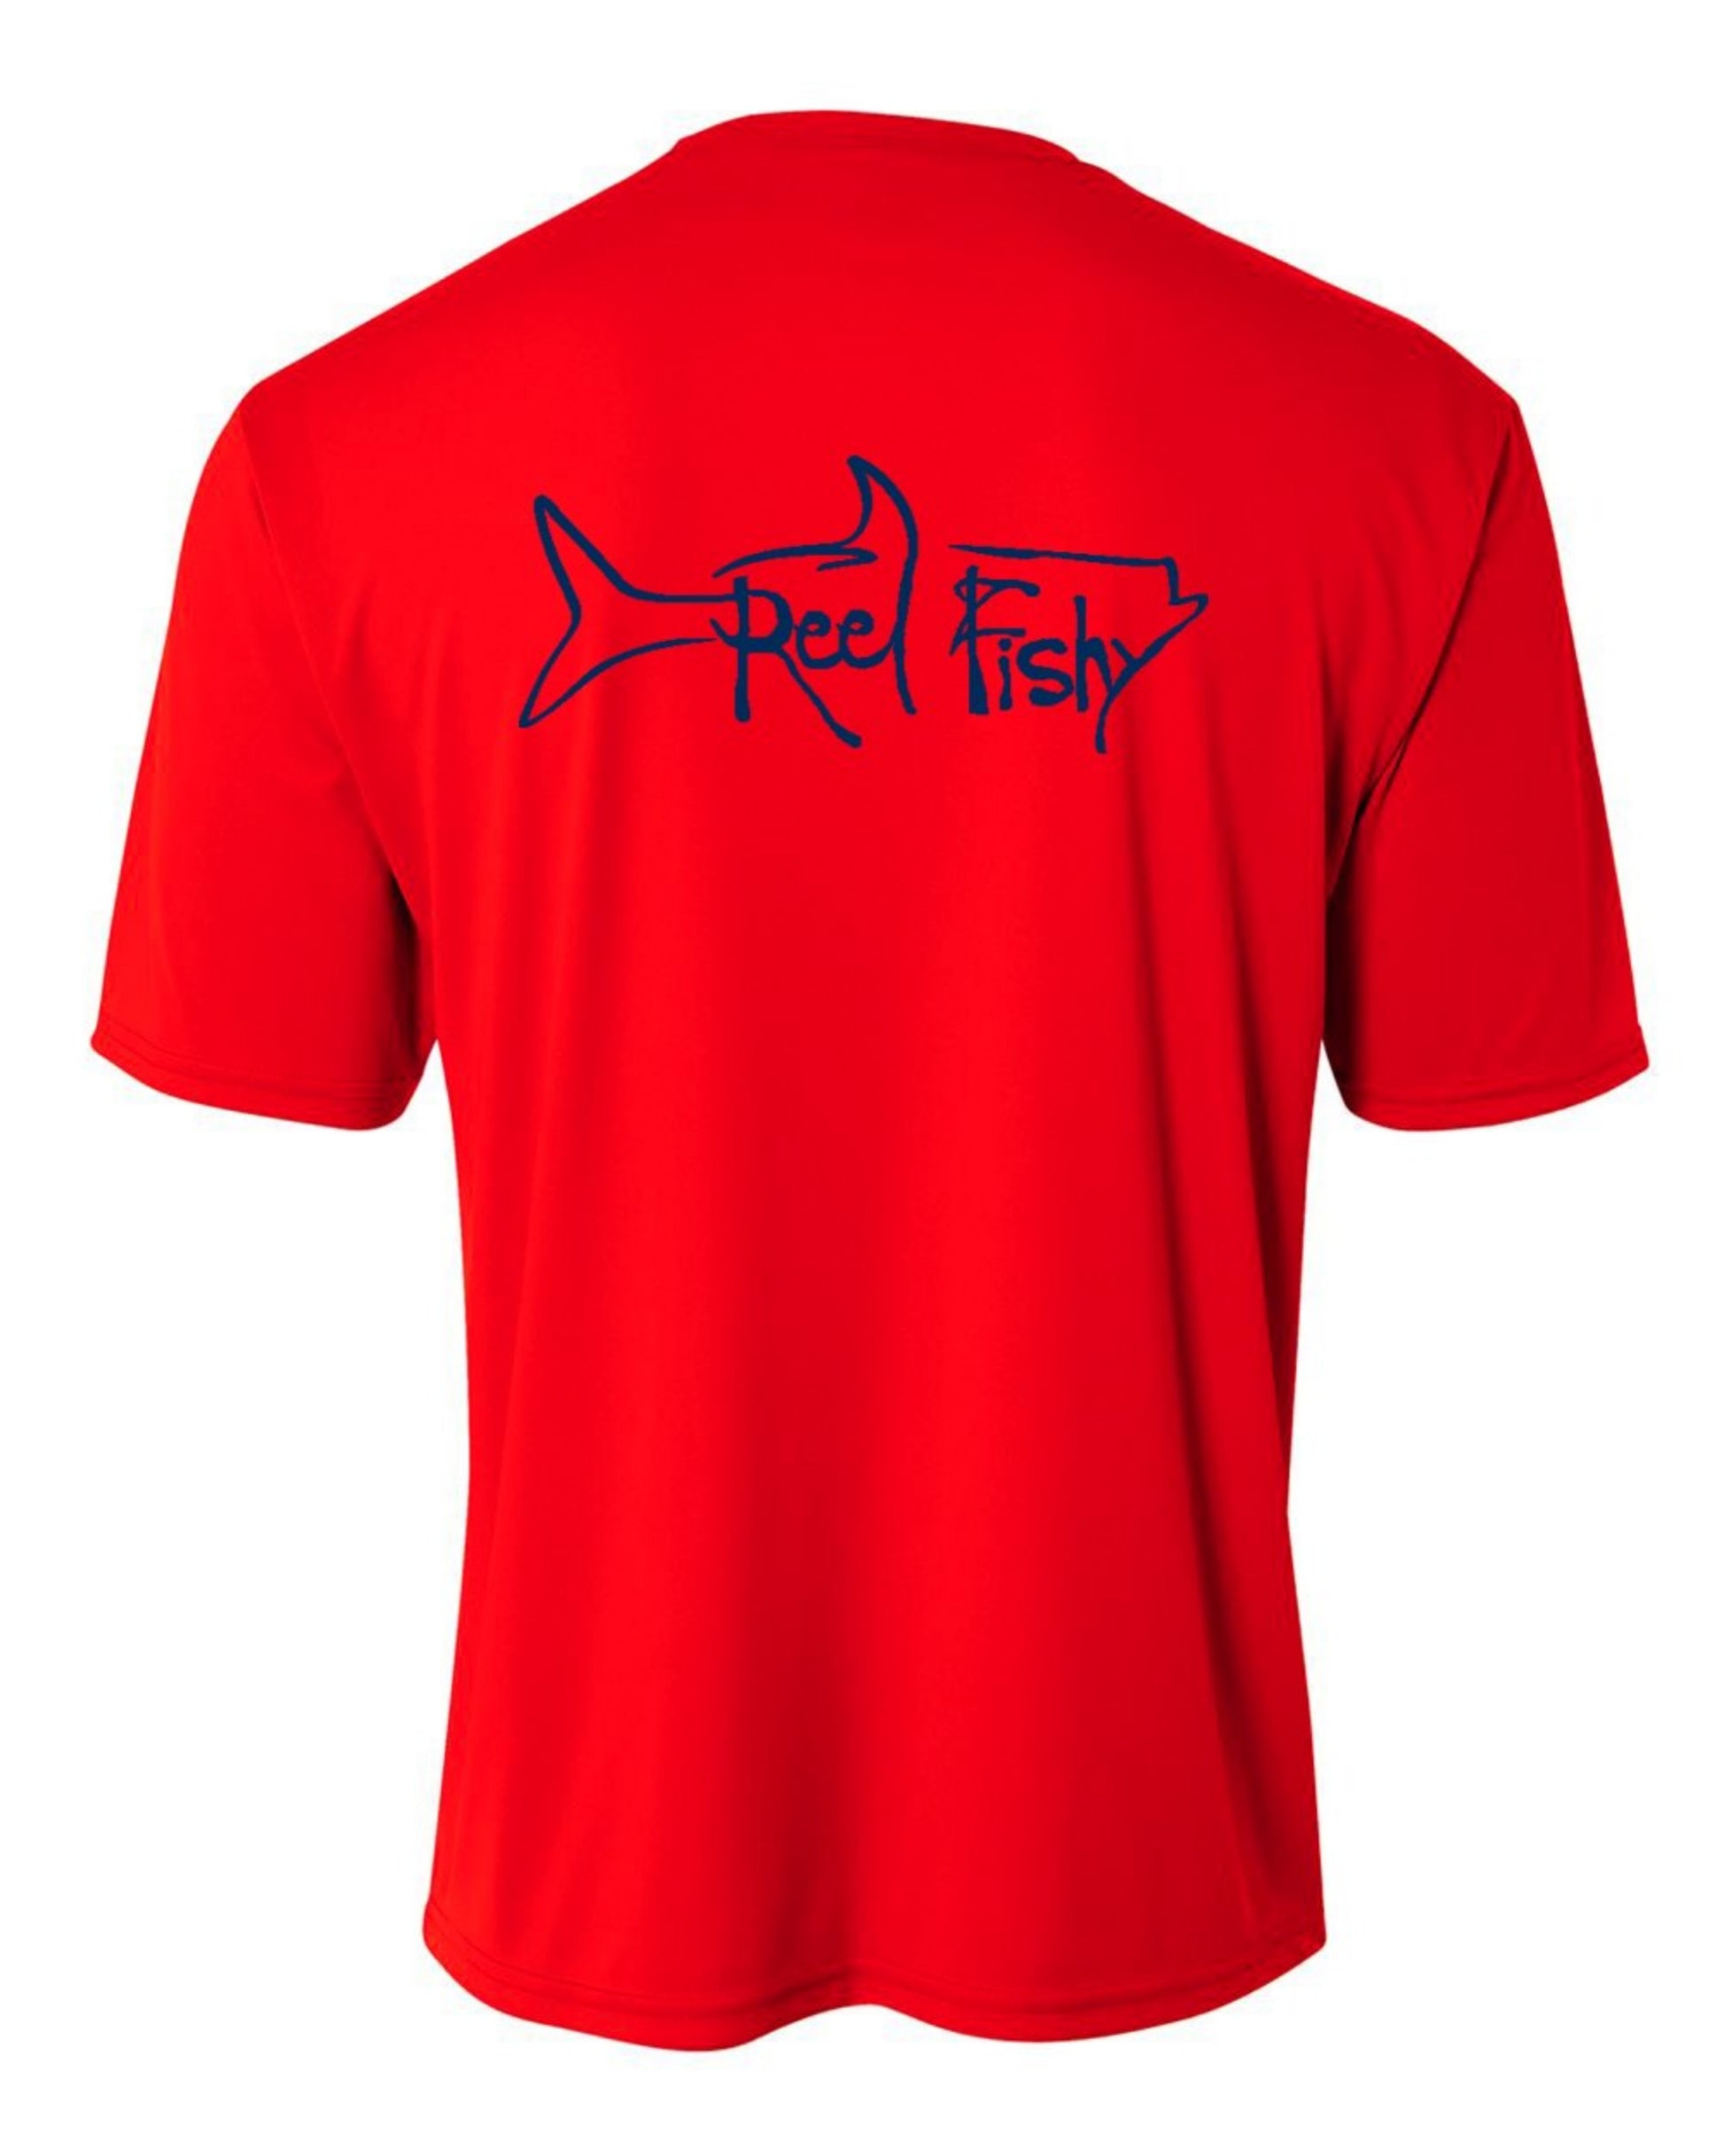 Tarpon Performance Digital Camo 50+uv Fishing Long Sleeve Shirts- Reel Fishy Apparel M / Lt. Gray Camo - unisex